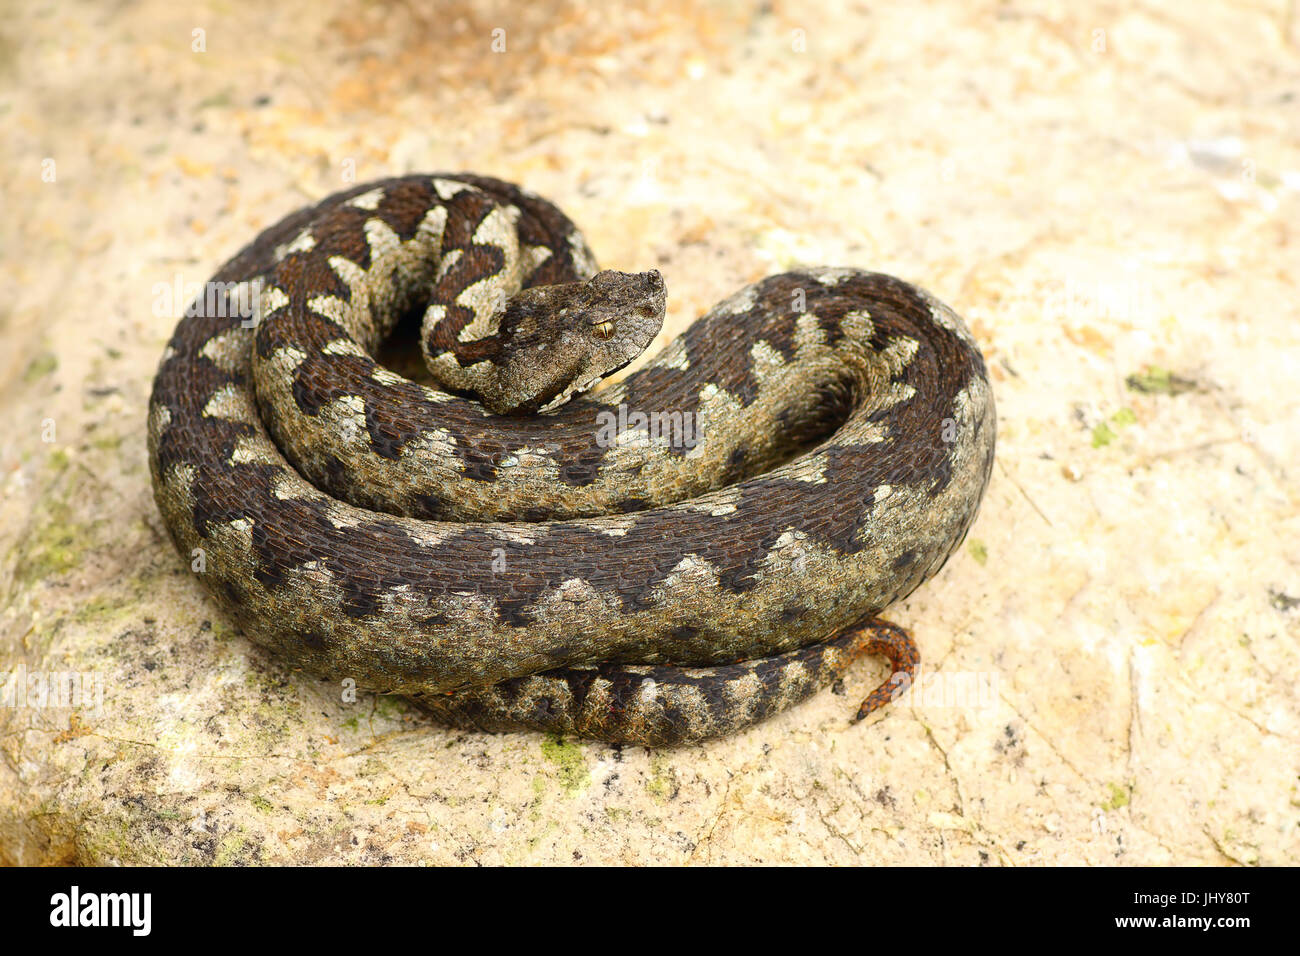 sand viper basking on a rock ( Vipera ammodytes, the most poisonous european snake ) Stock Photo